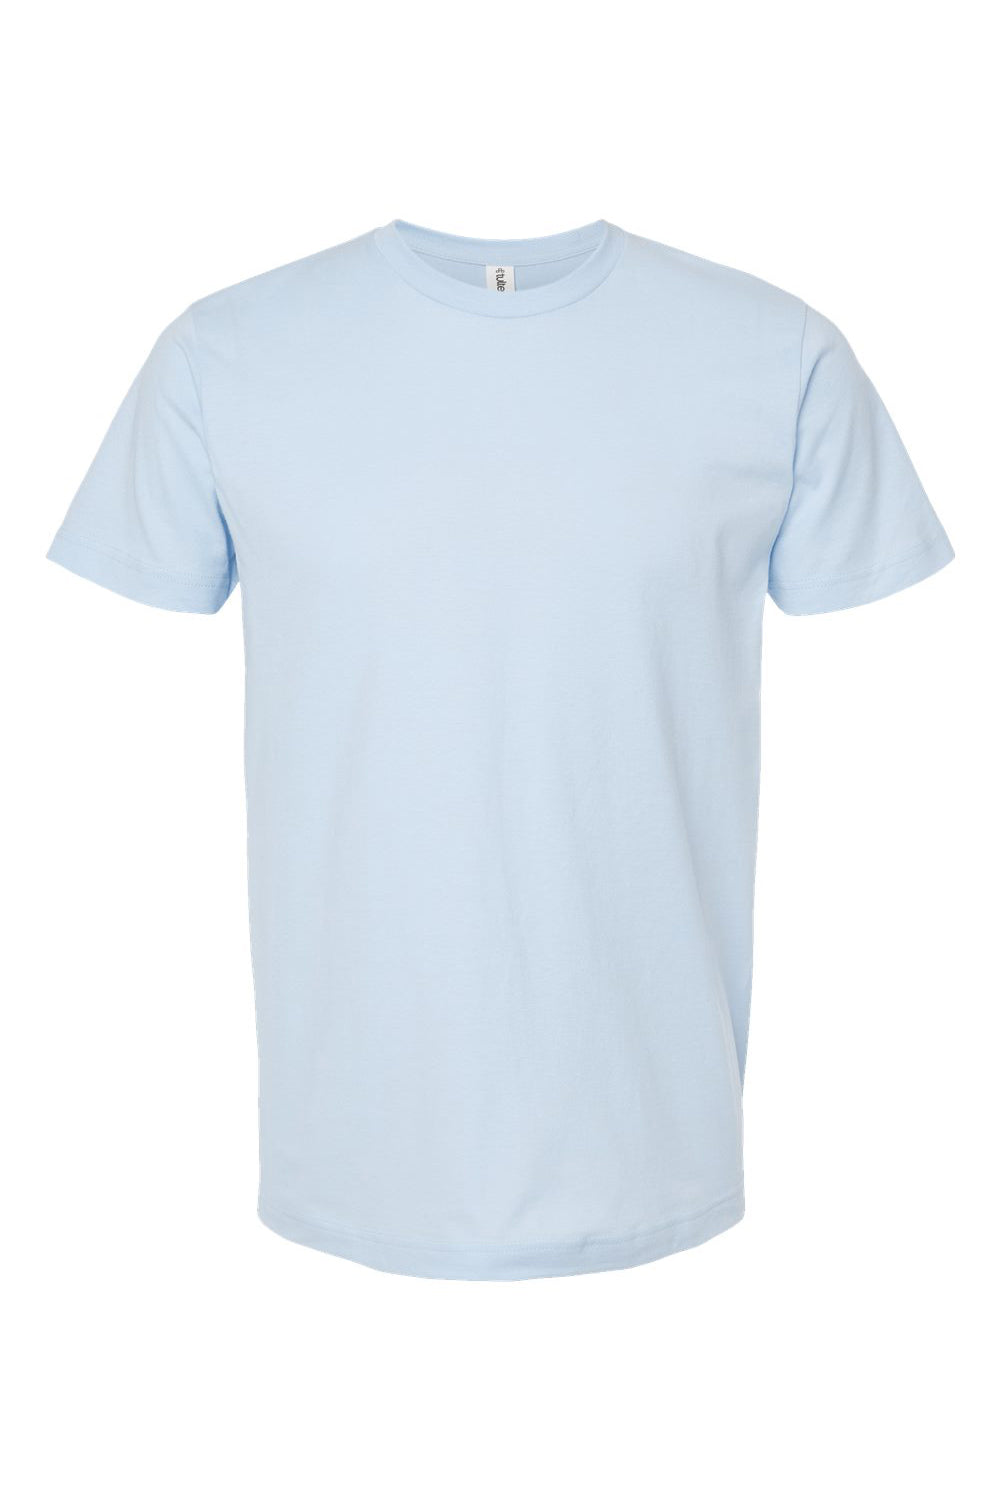 Tultex 202 Mens Fine Jersey Short Sleeve Crewneck T-Shirt Baby Blue Flat Front